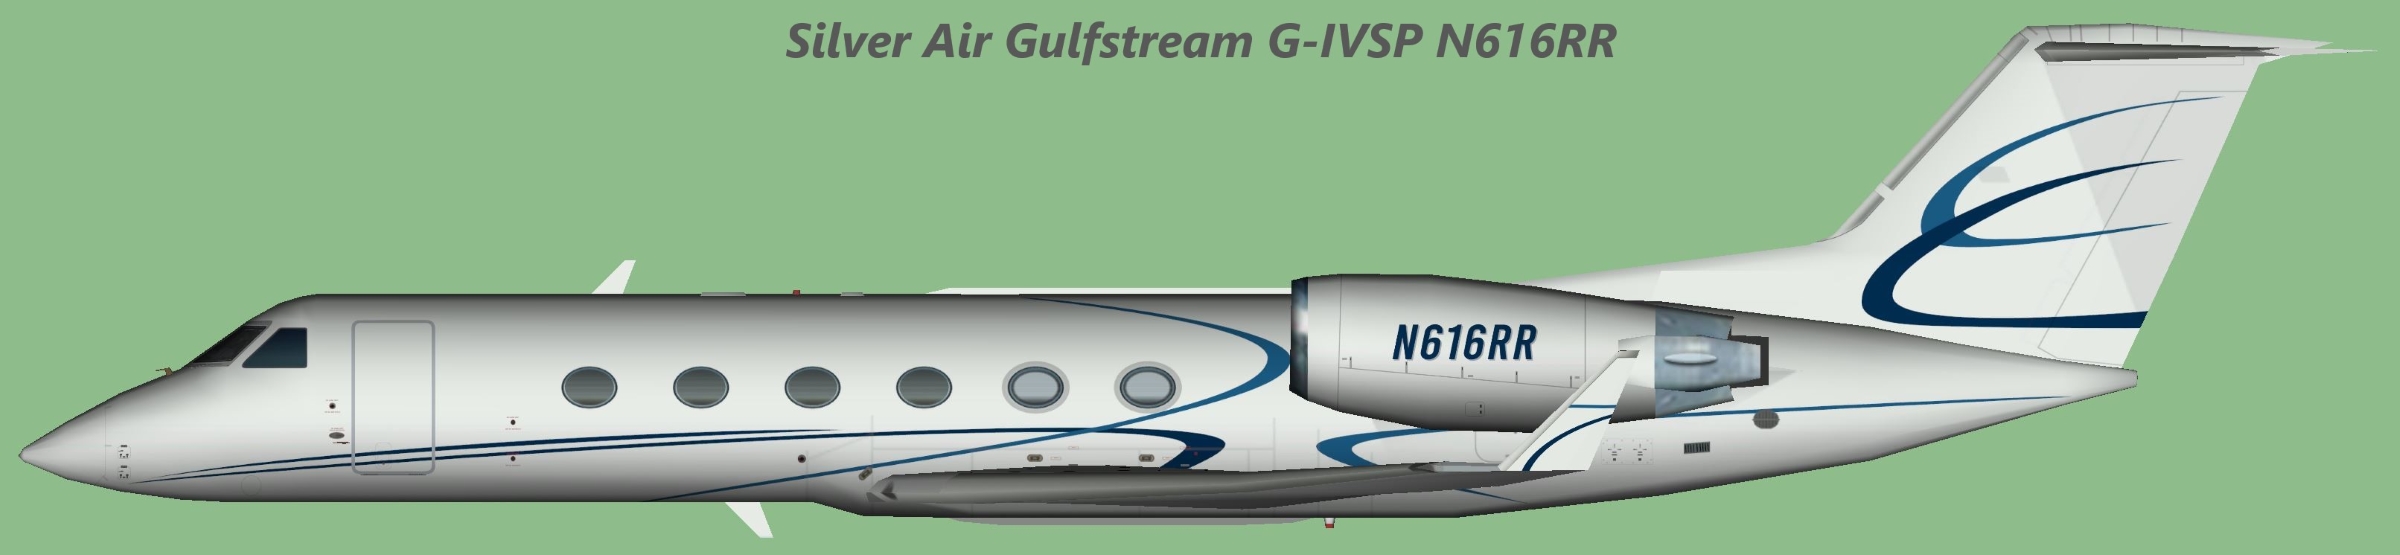 Silver Air Gulfstream G-IVSP